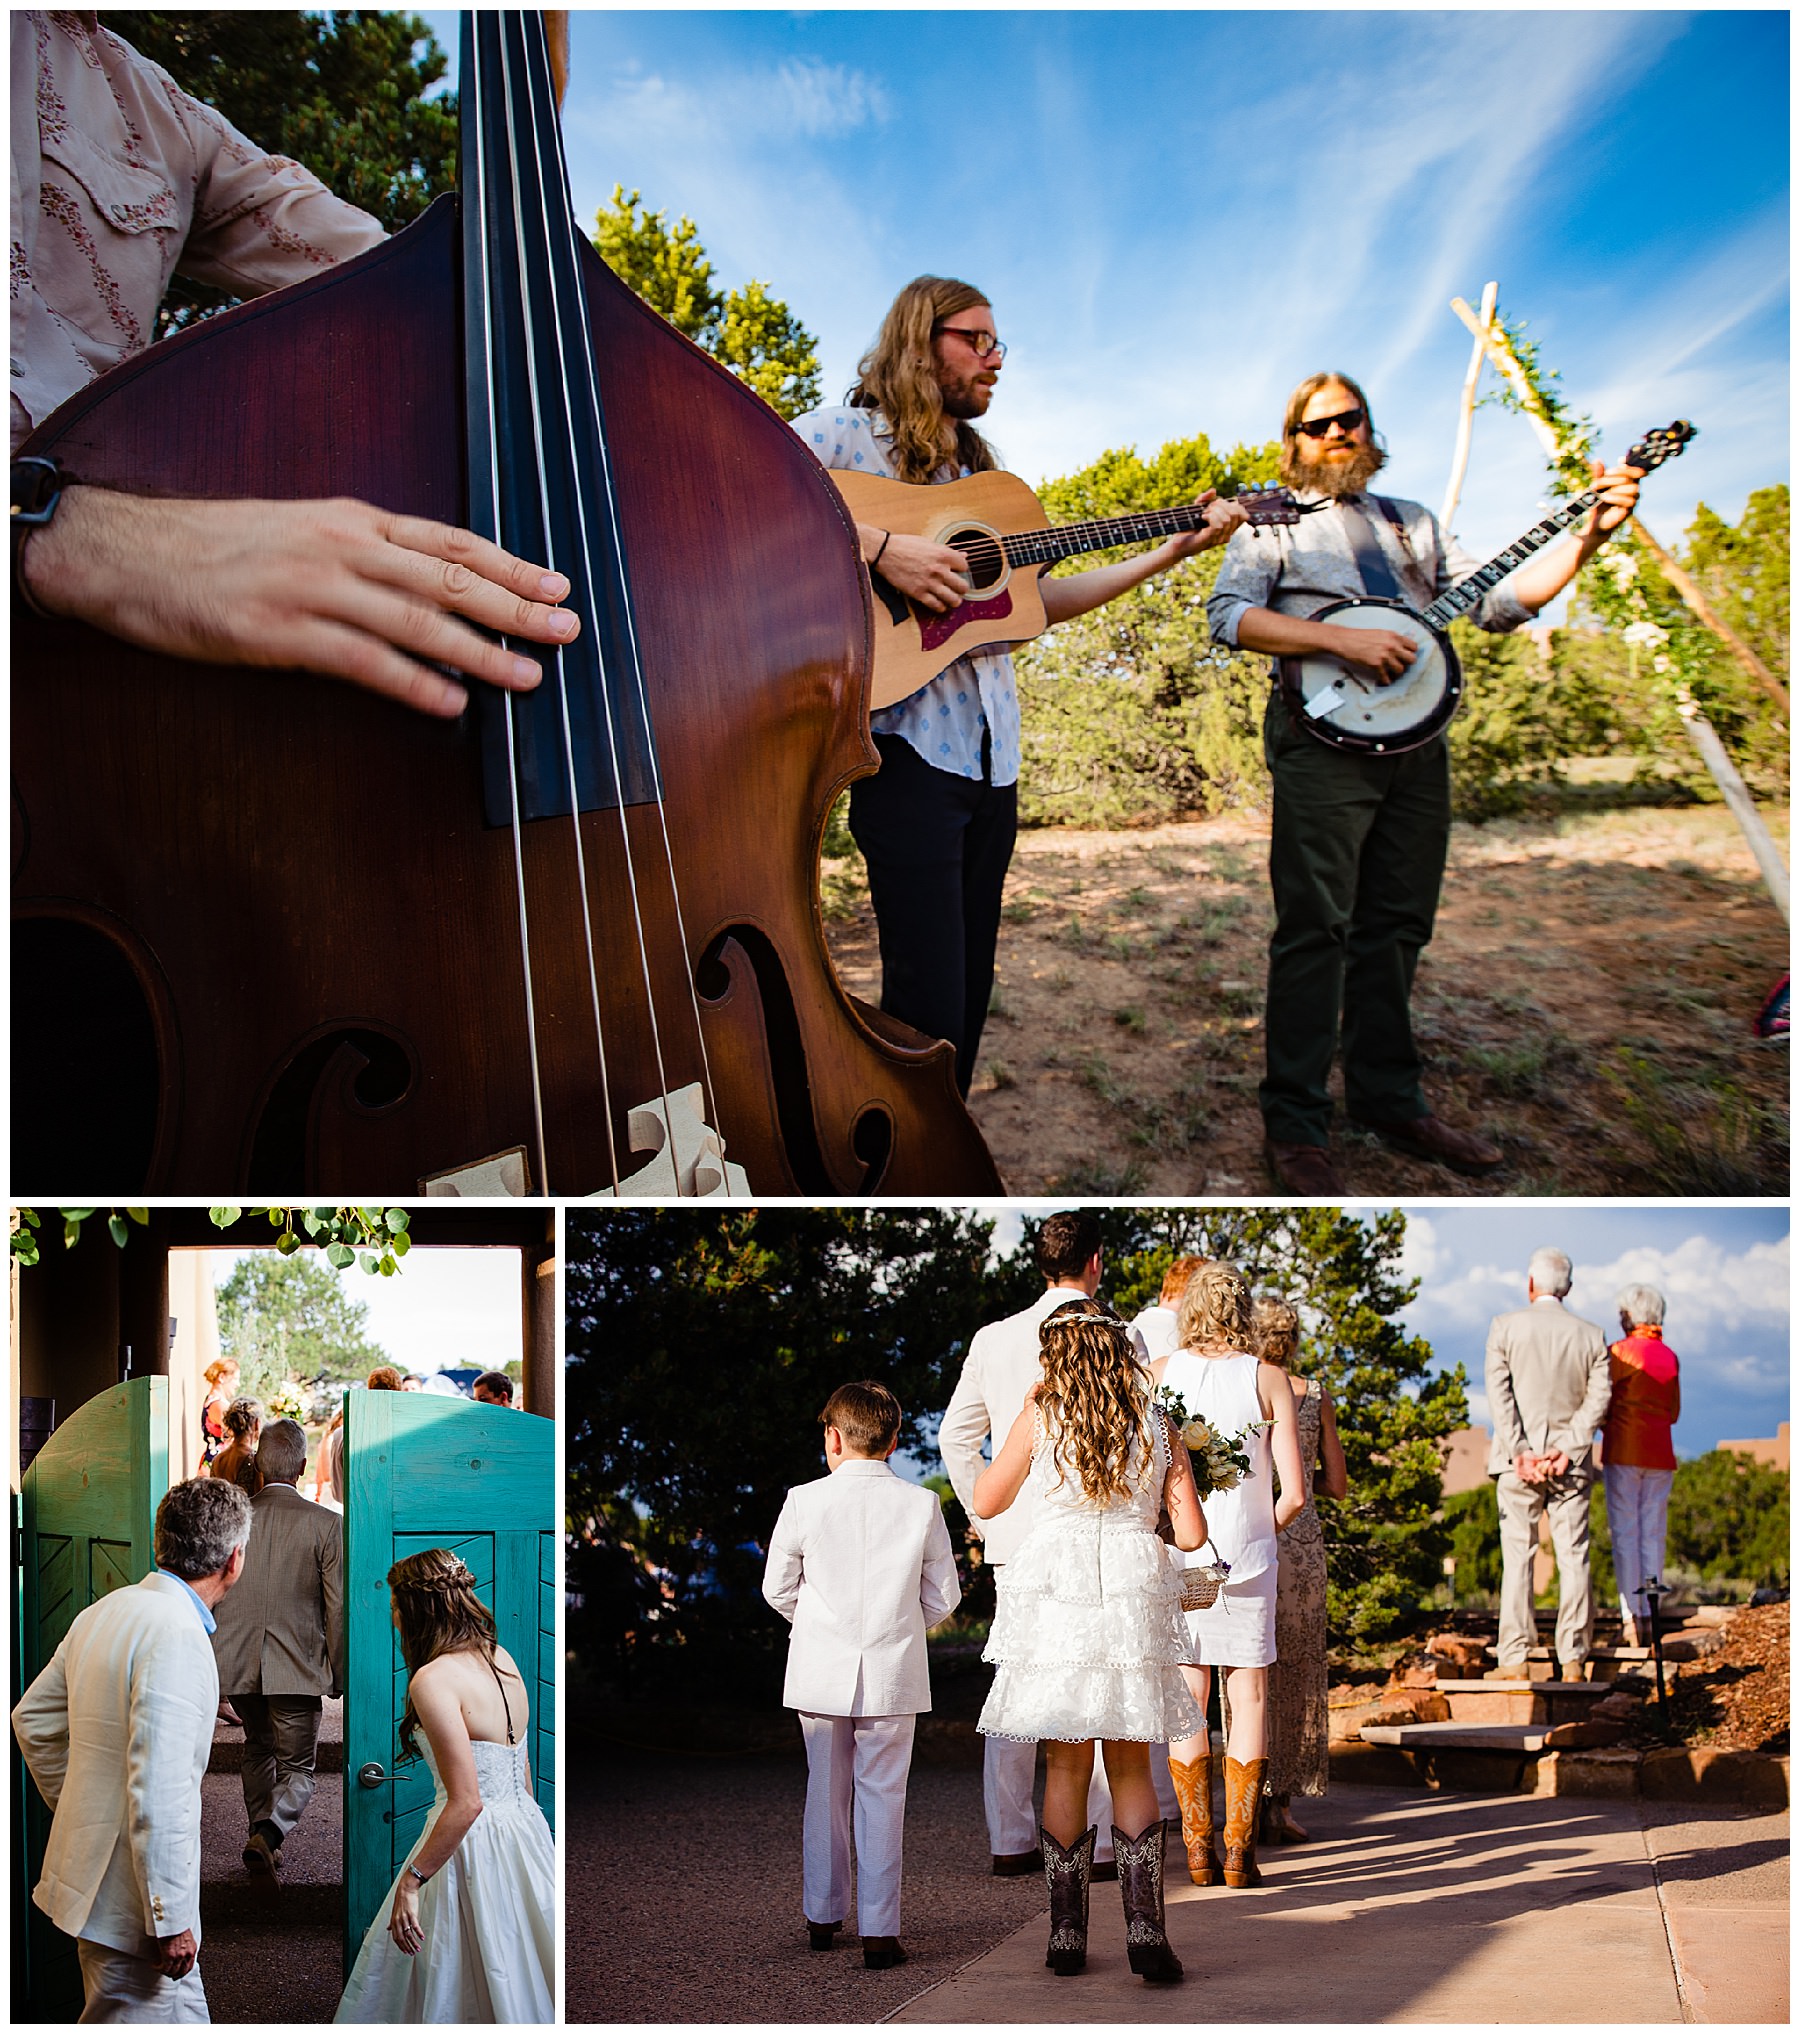 Blue grass band at backyard wedding in Santa Fe